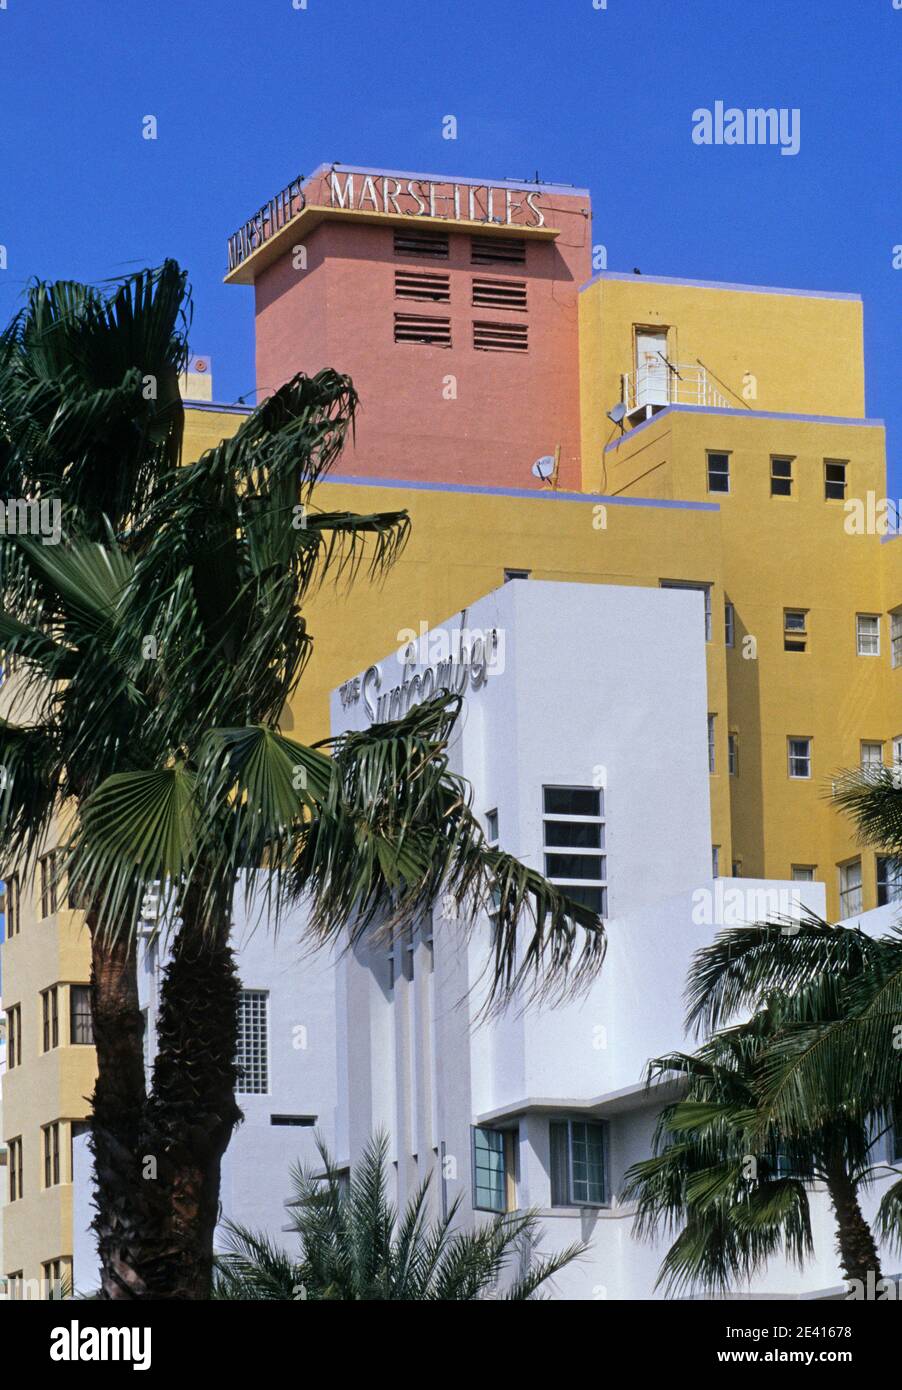 Marseilles Hotel and the Surfcomber Hotel, Collins Avenue Miami Beach Florida USA Stock Photo